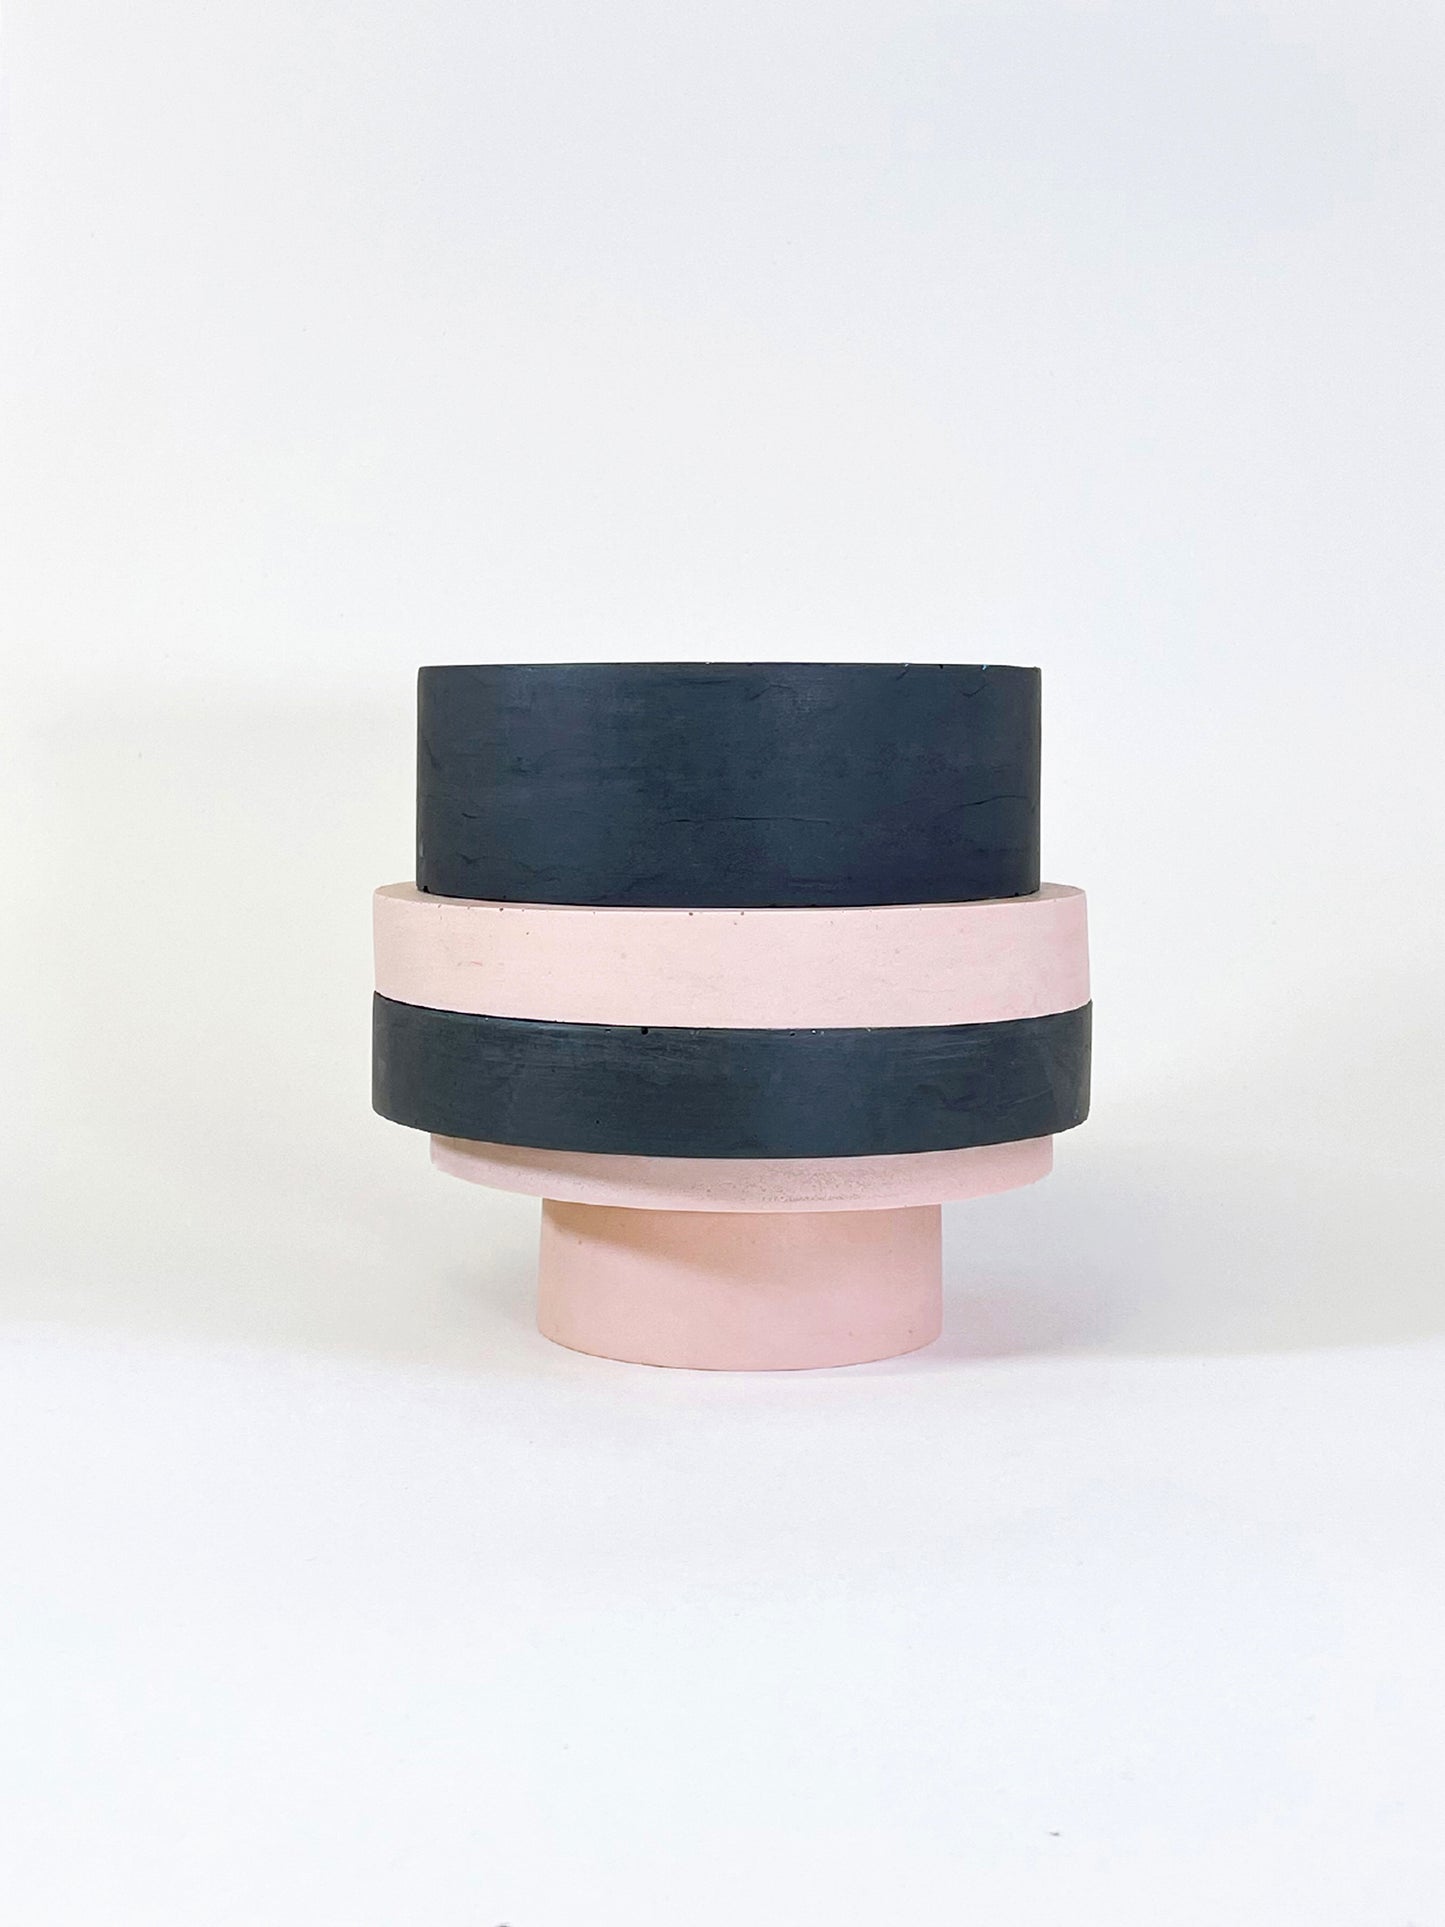 Totemico Large Pot- Black and Blush Pink